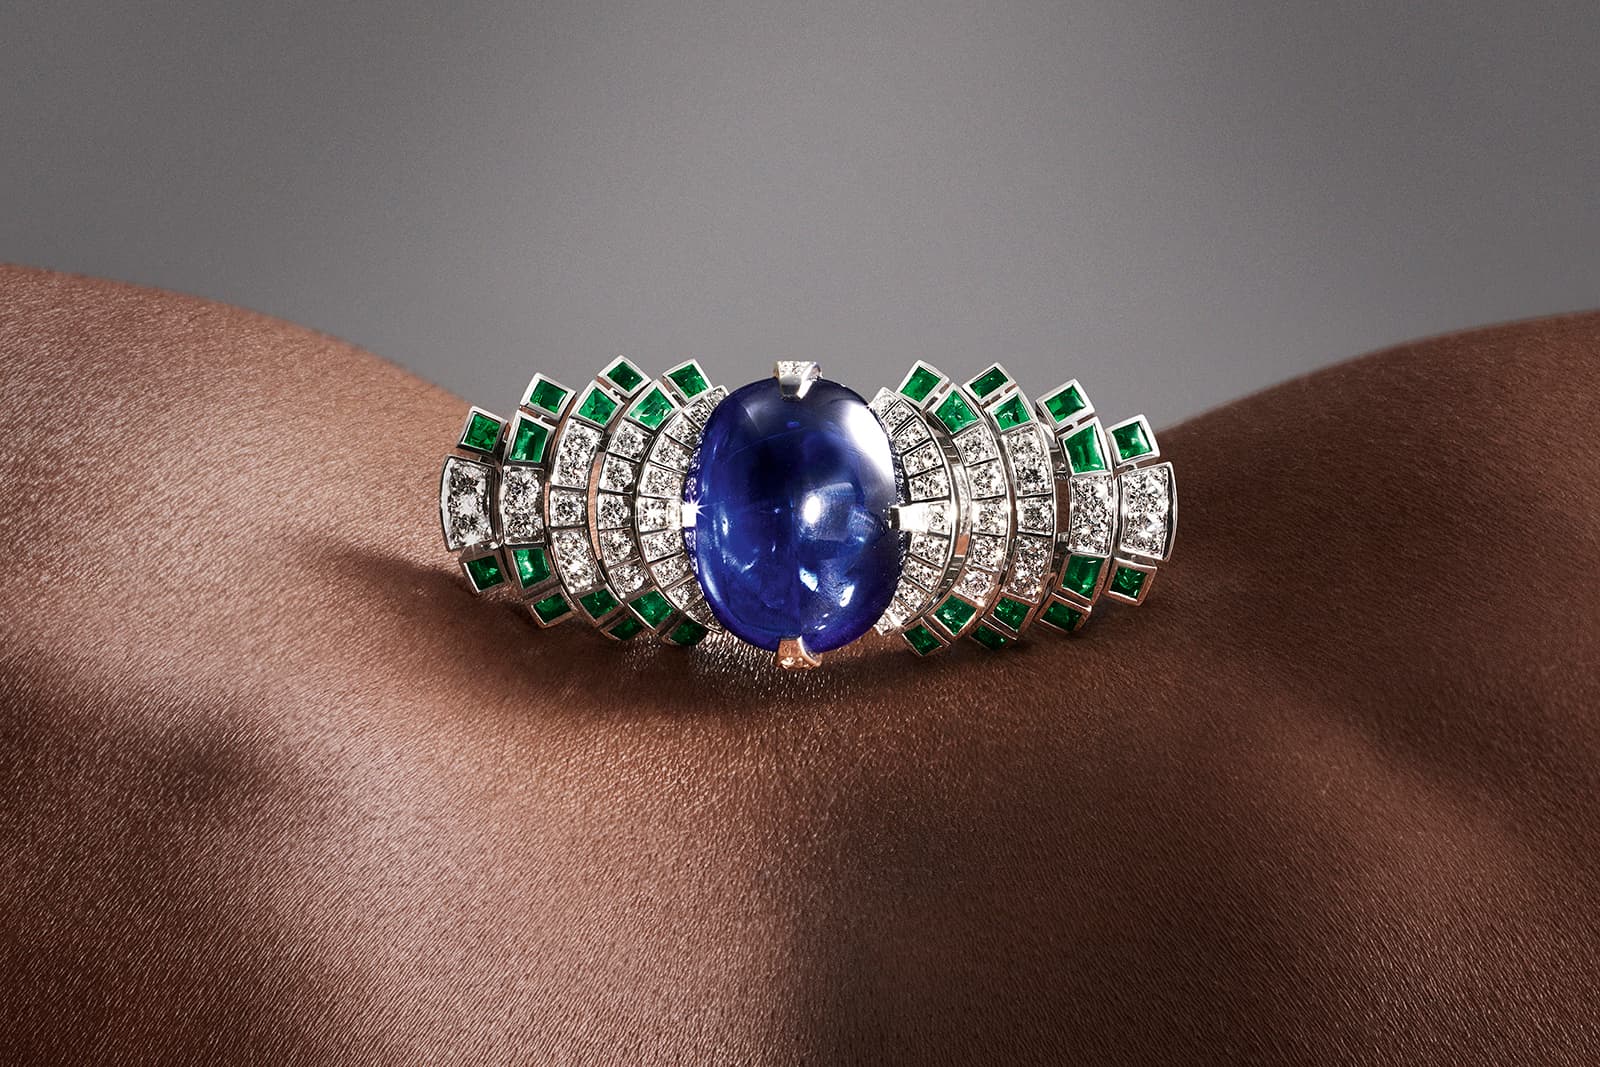 The Rhythm of Sixième Sens par Cartier High Jewellery